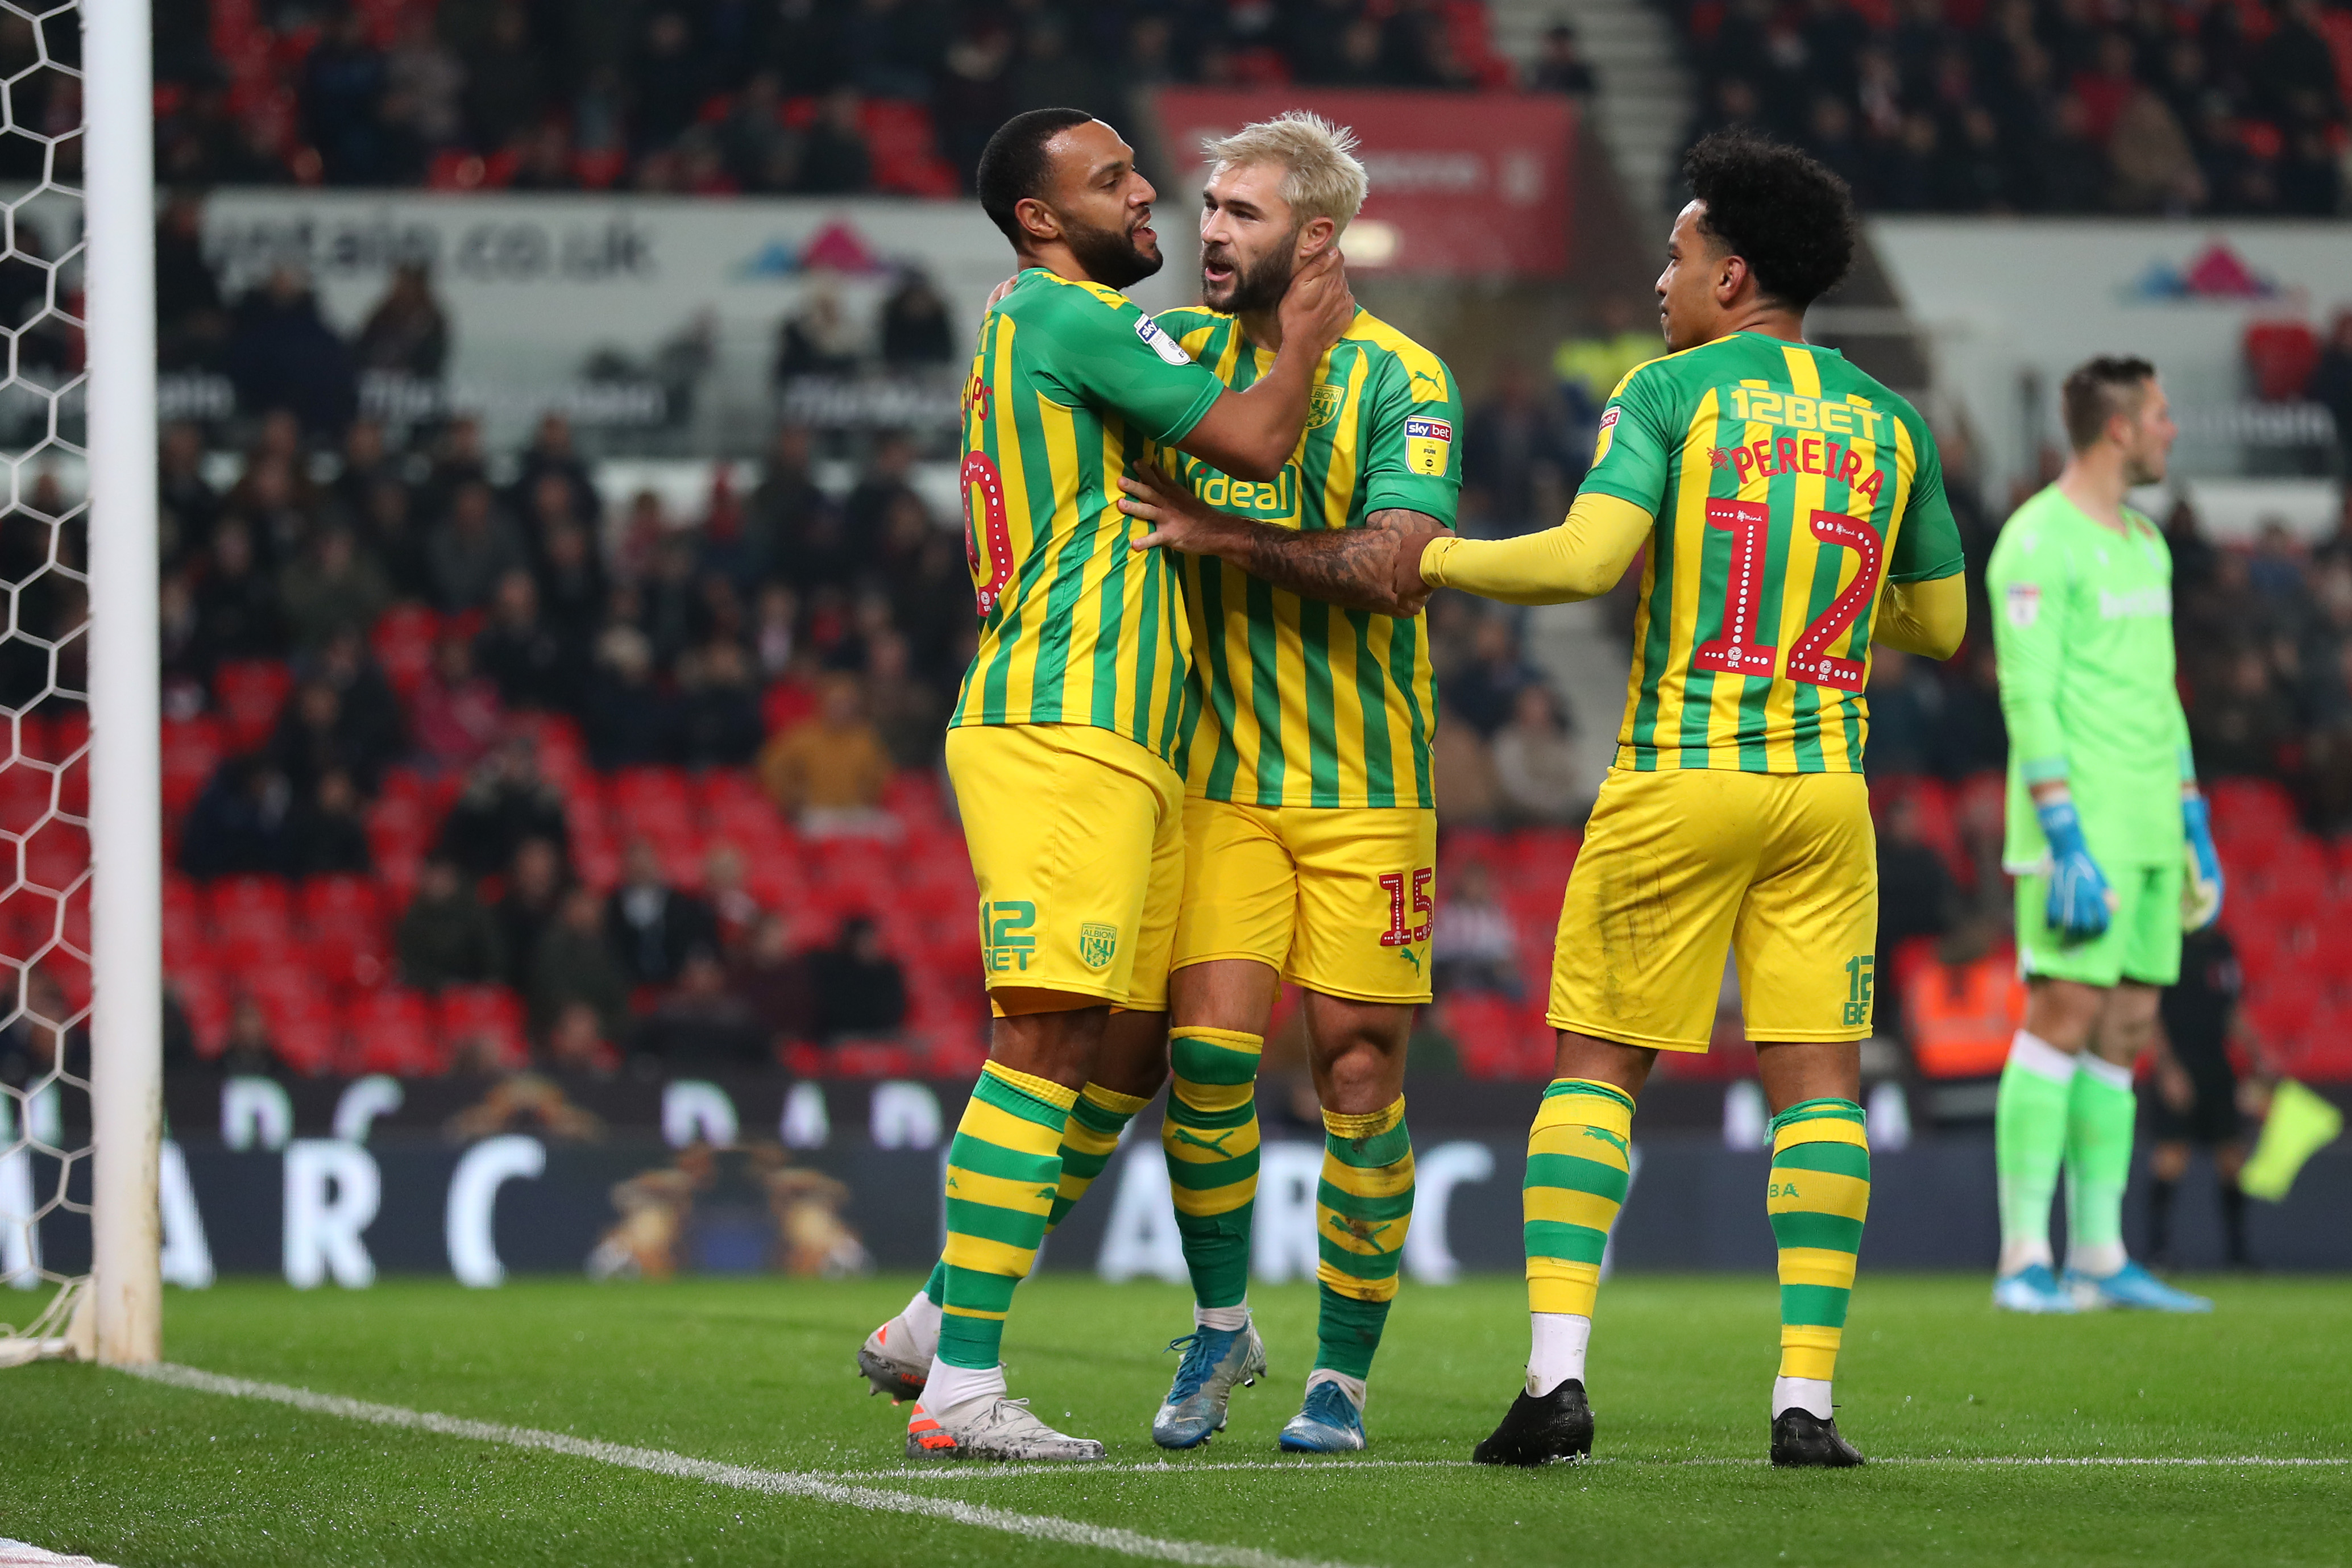 Matt Phillips celebrates scoring at Stoke City in 2019 with Charlie Austin and Matheus Pereira